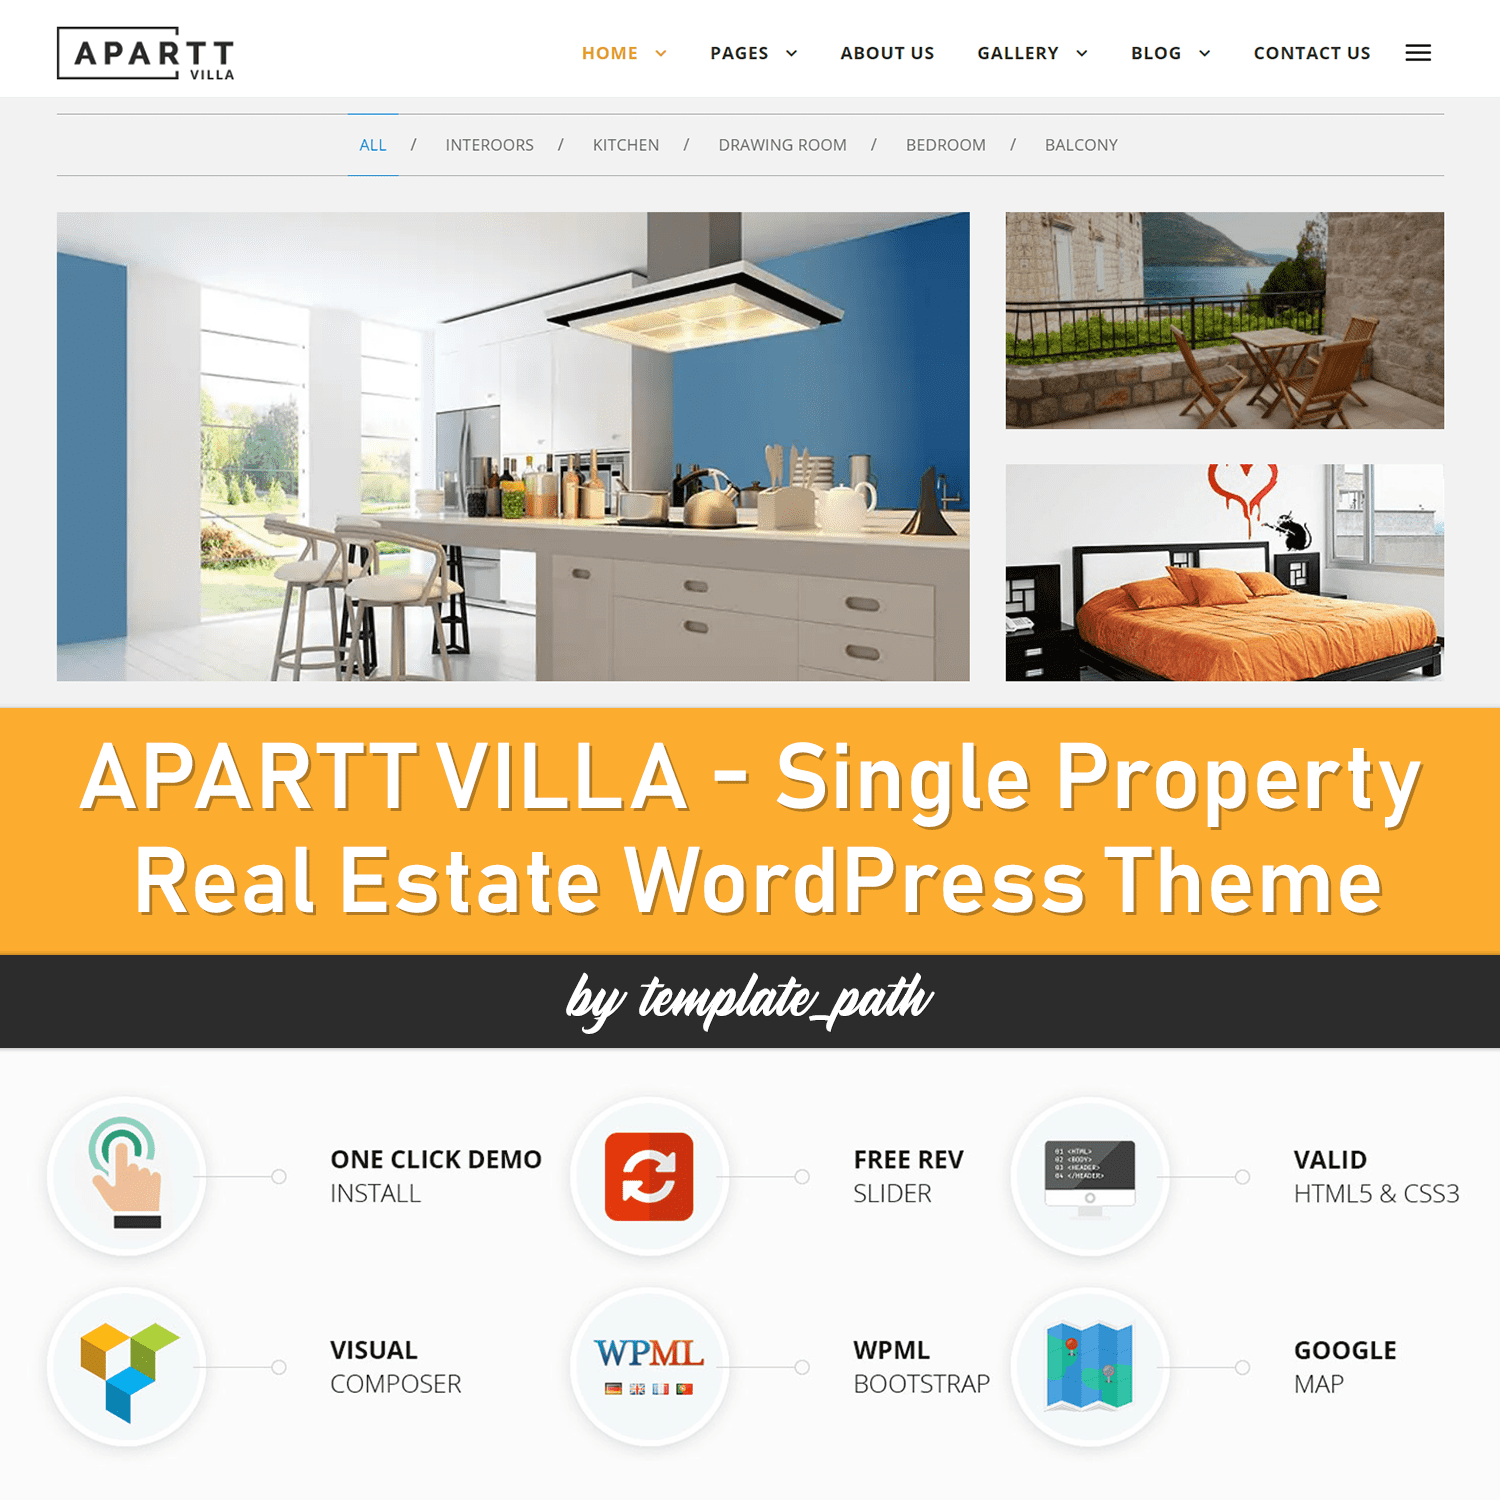 Apartt Villa - Single Property Real Estate Wordpress Theme Cover.